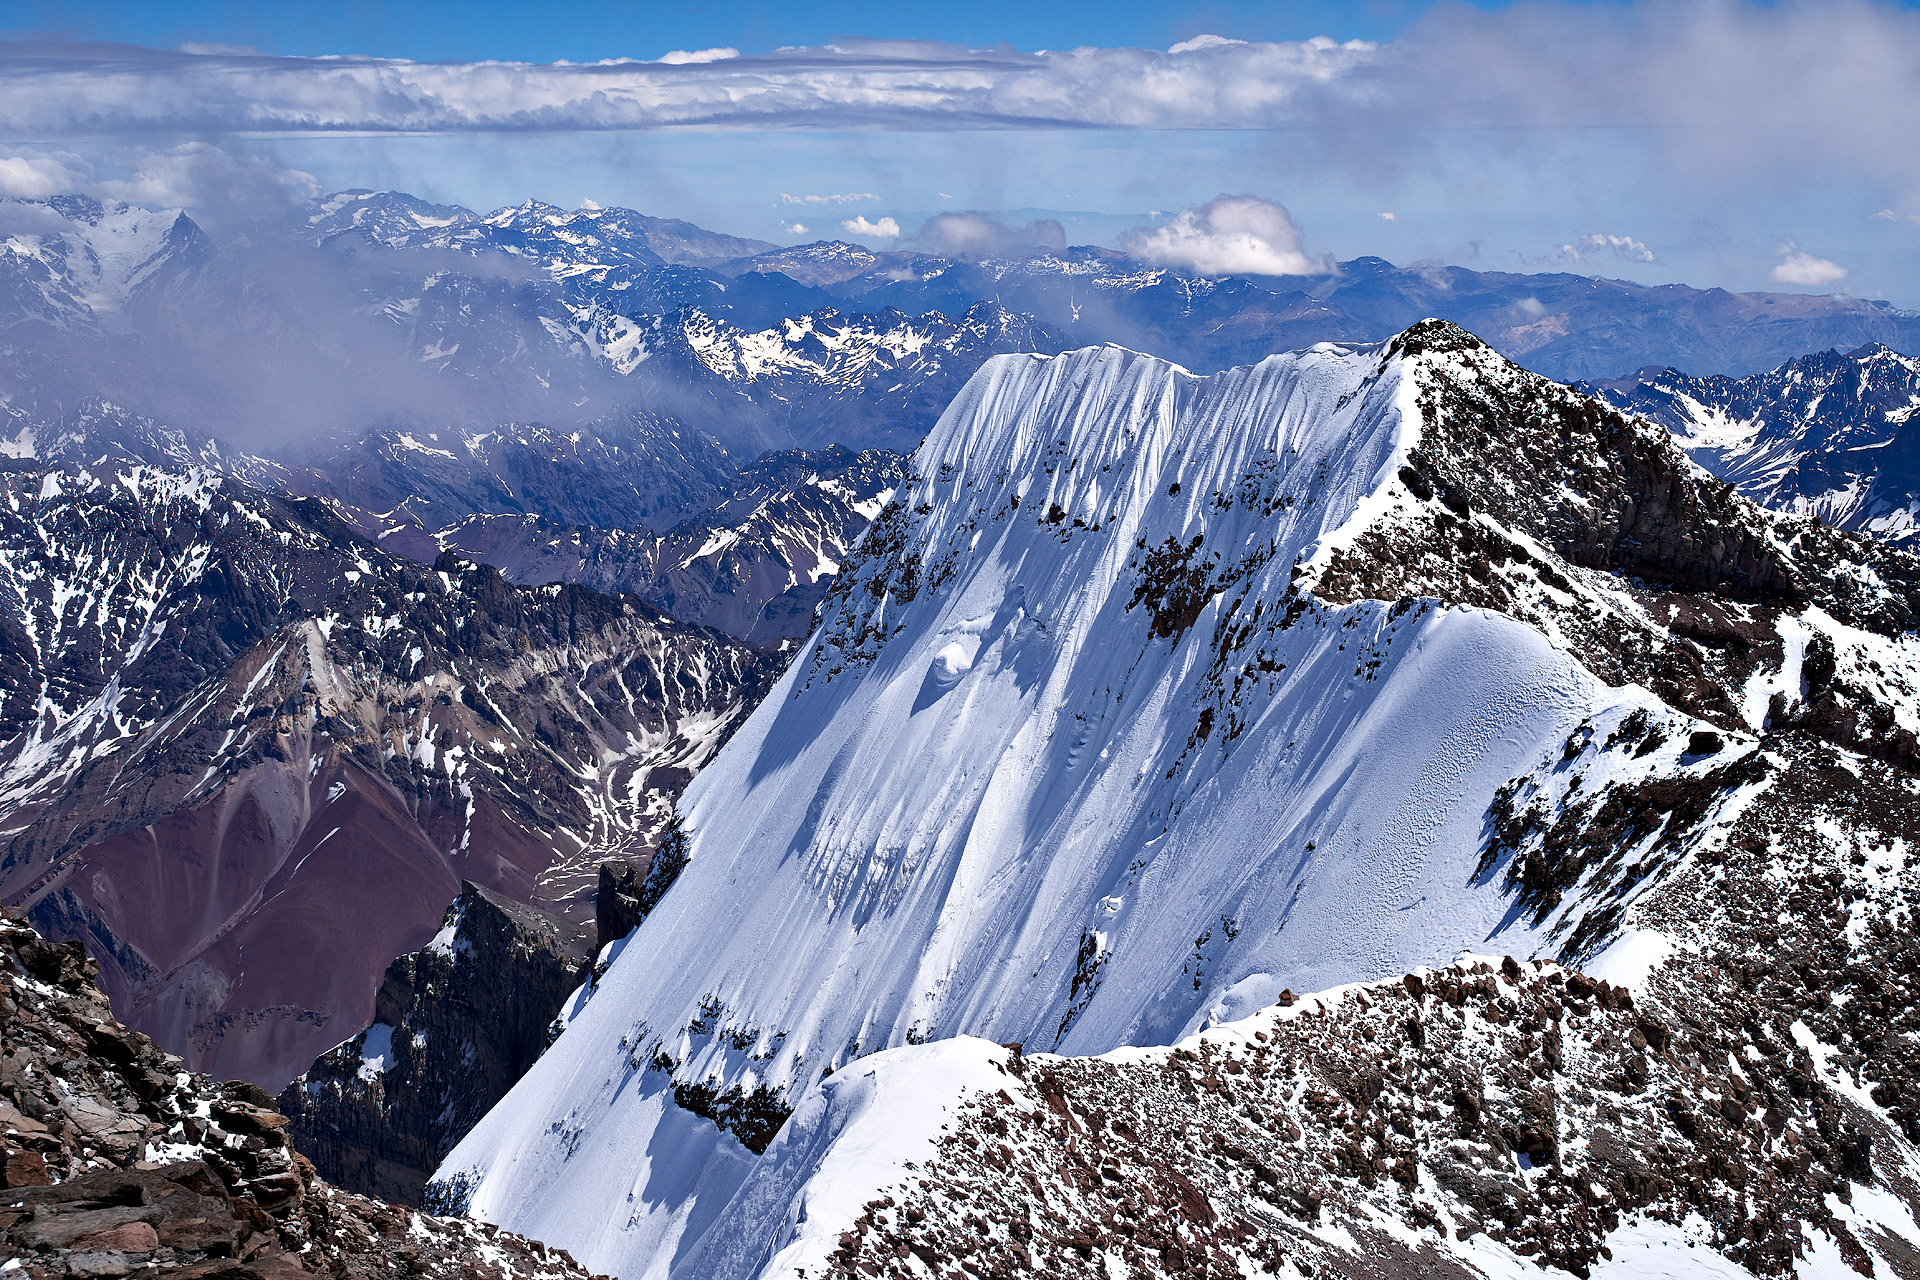 Длиннейшая в мире горная цепь. Andes Аконкагуа гора. Мендоса Аргентина Аконкагуа. Горная цепь Анды. Южная Америка горы Анды.